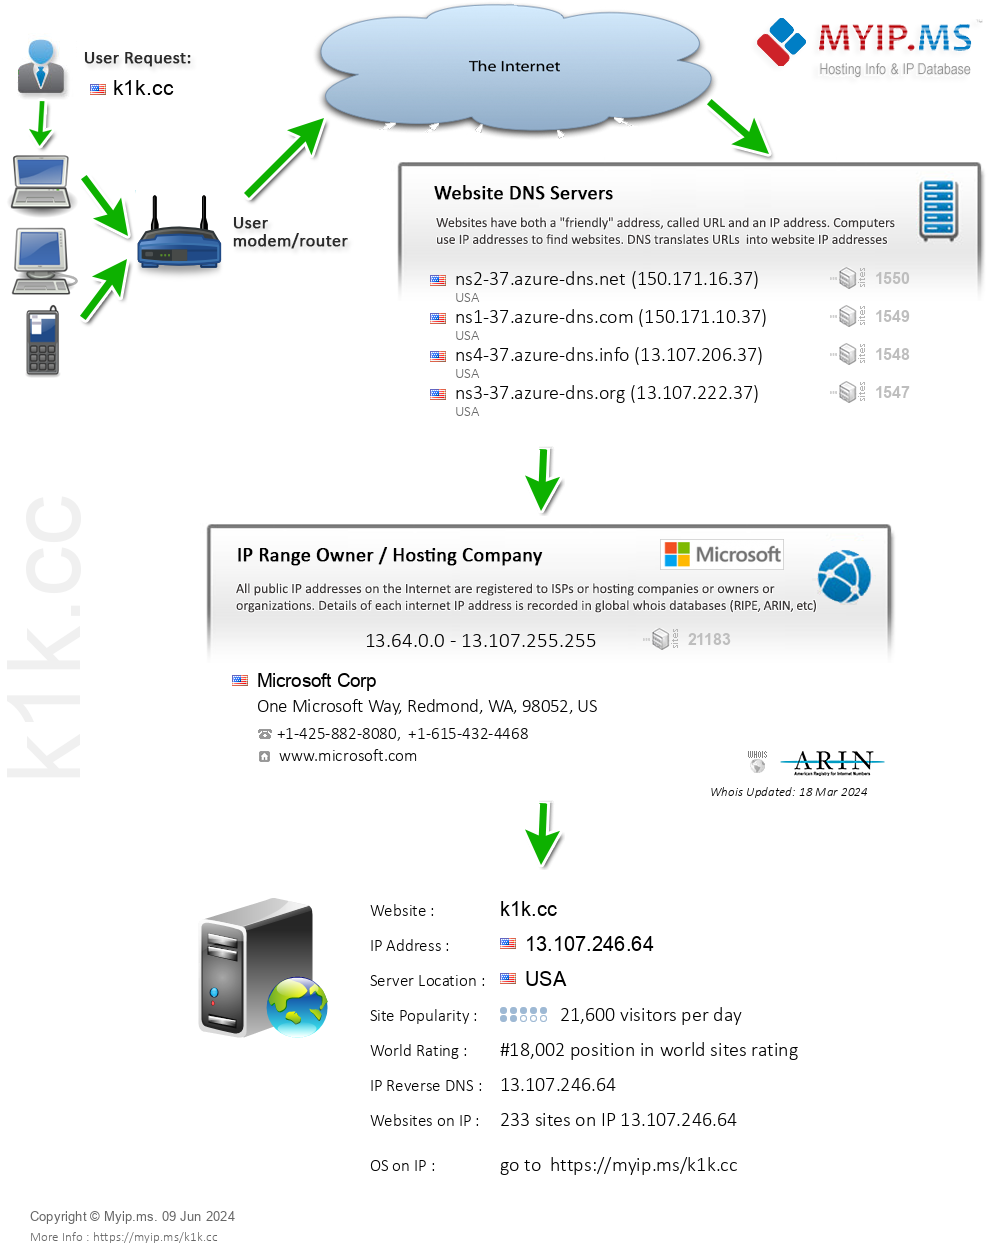 K1k.cc - Website Hosting Visual IP Diagram